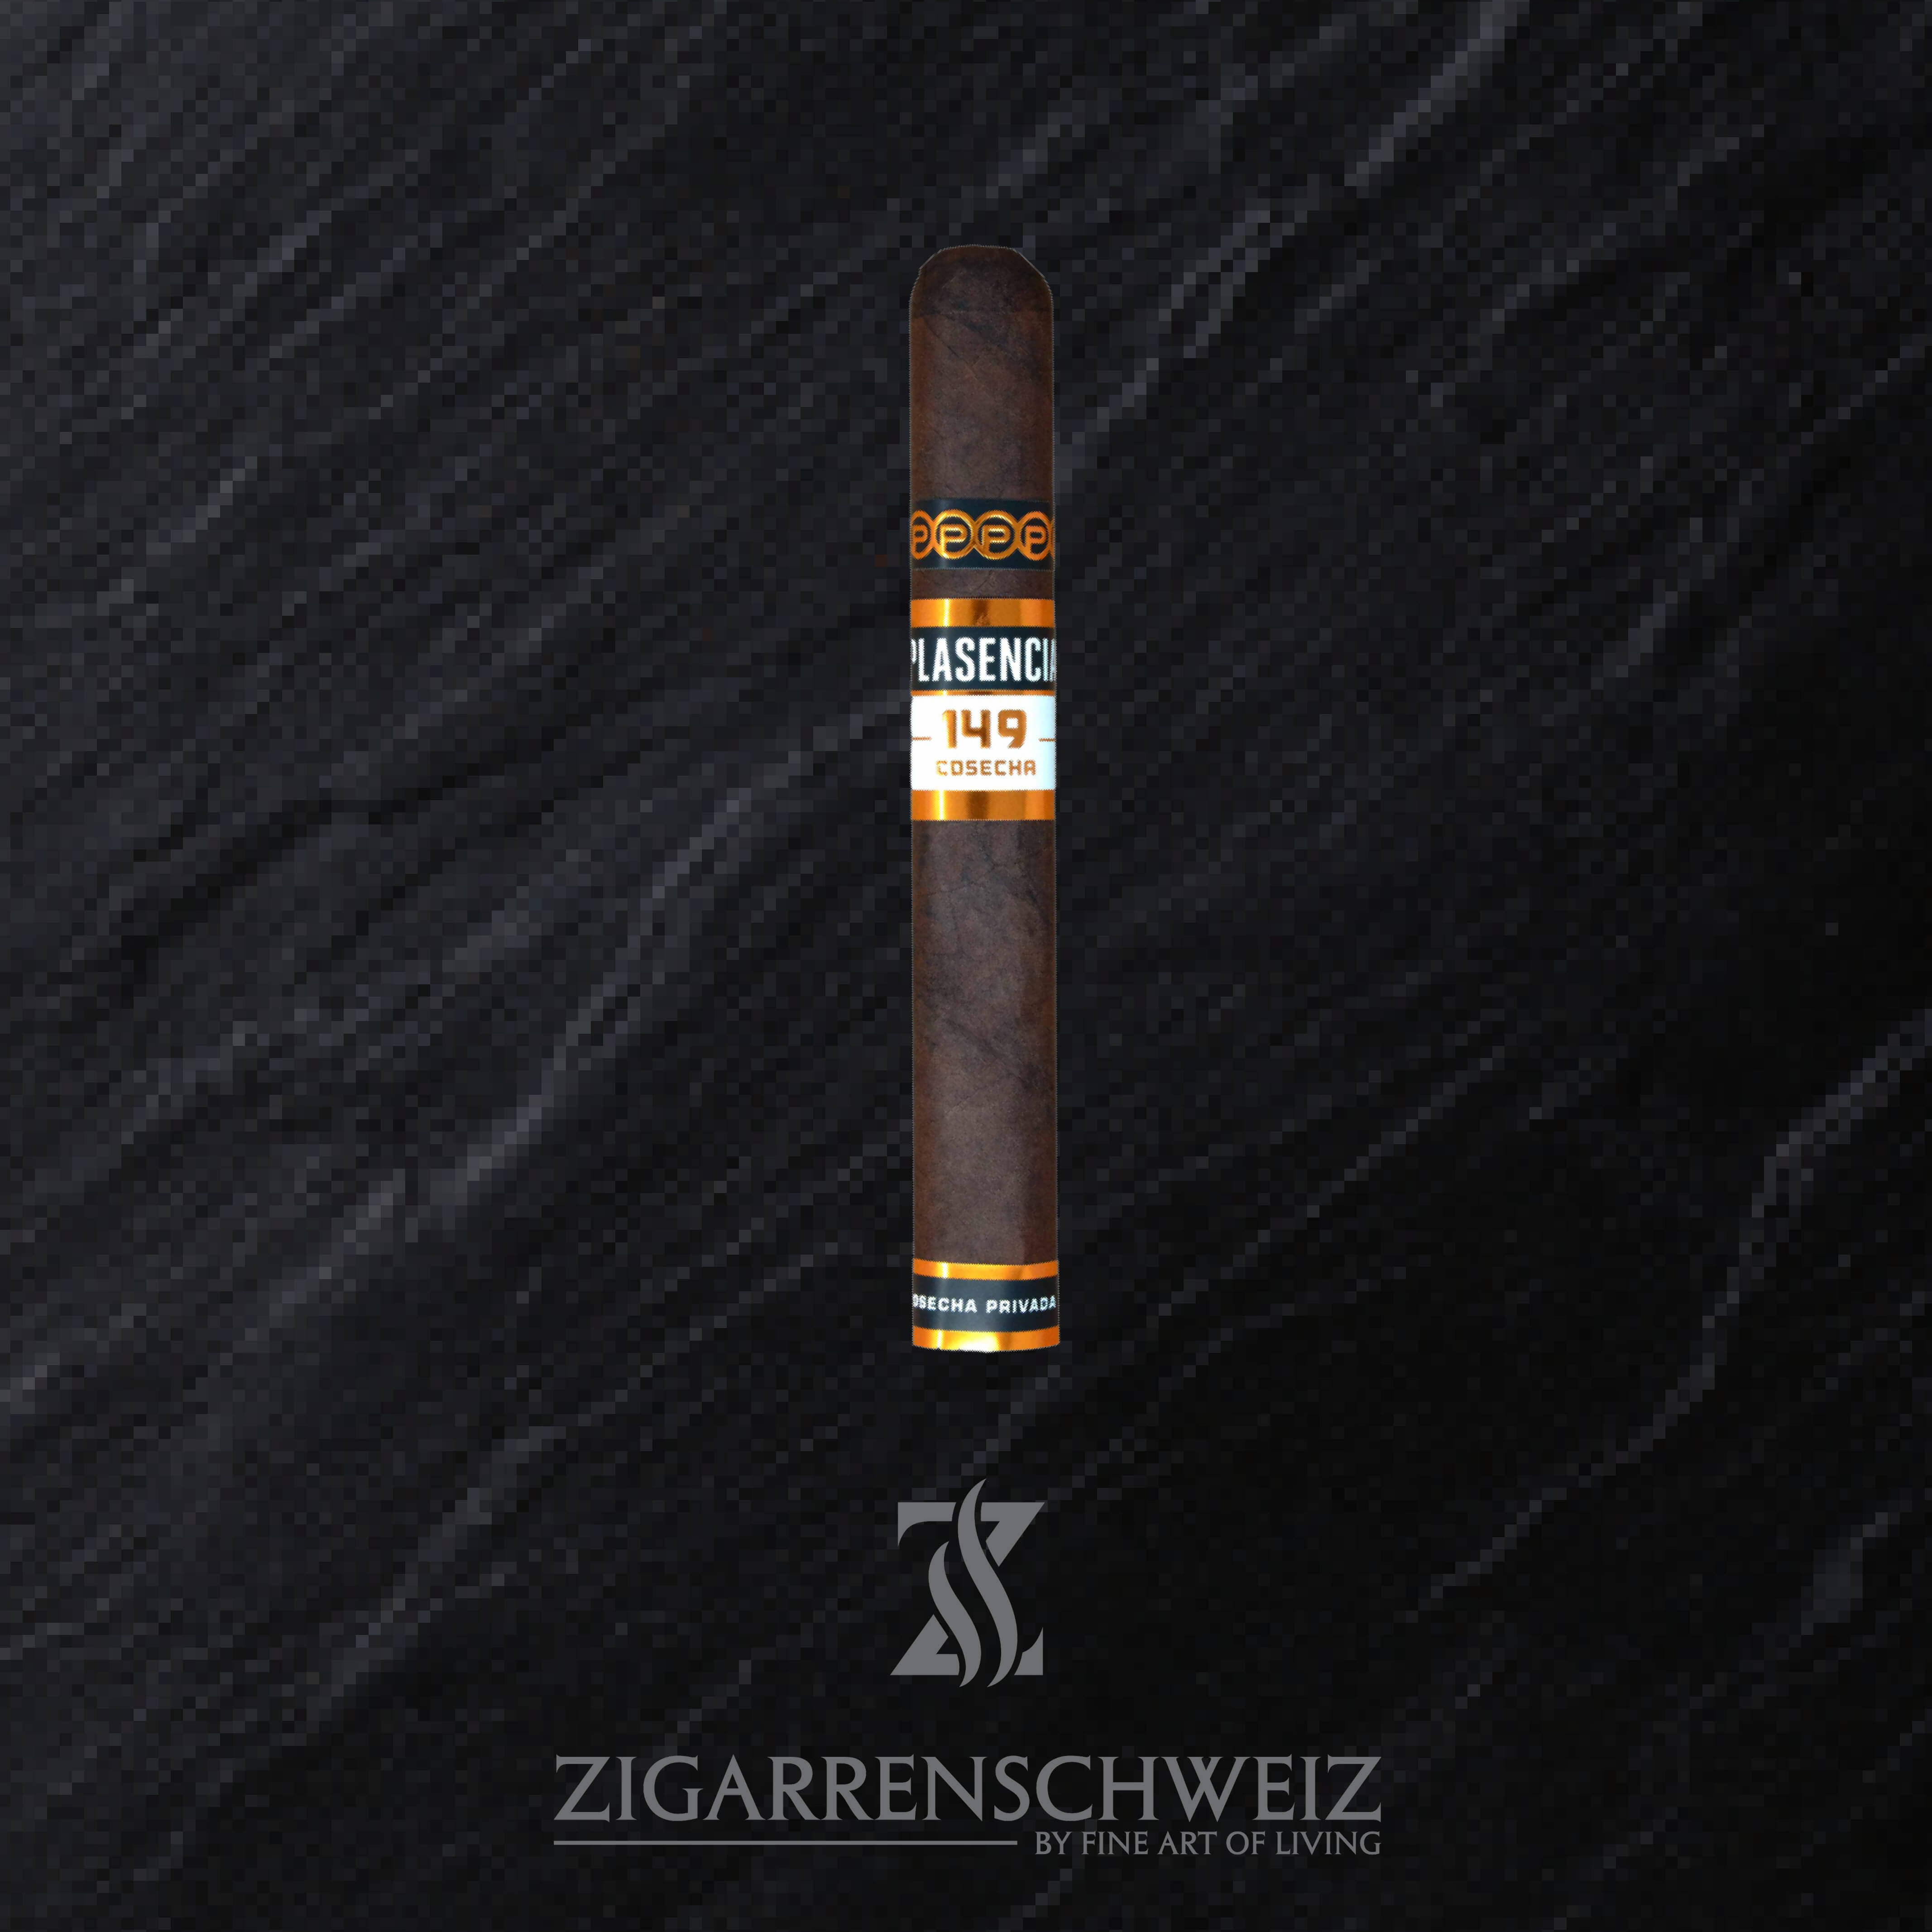 Plasencia Cosecha 149 Azacualpa Zigarre im Toro Format